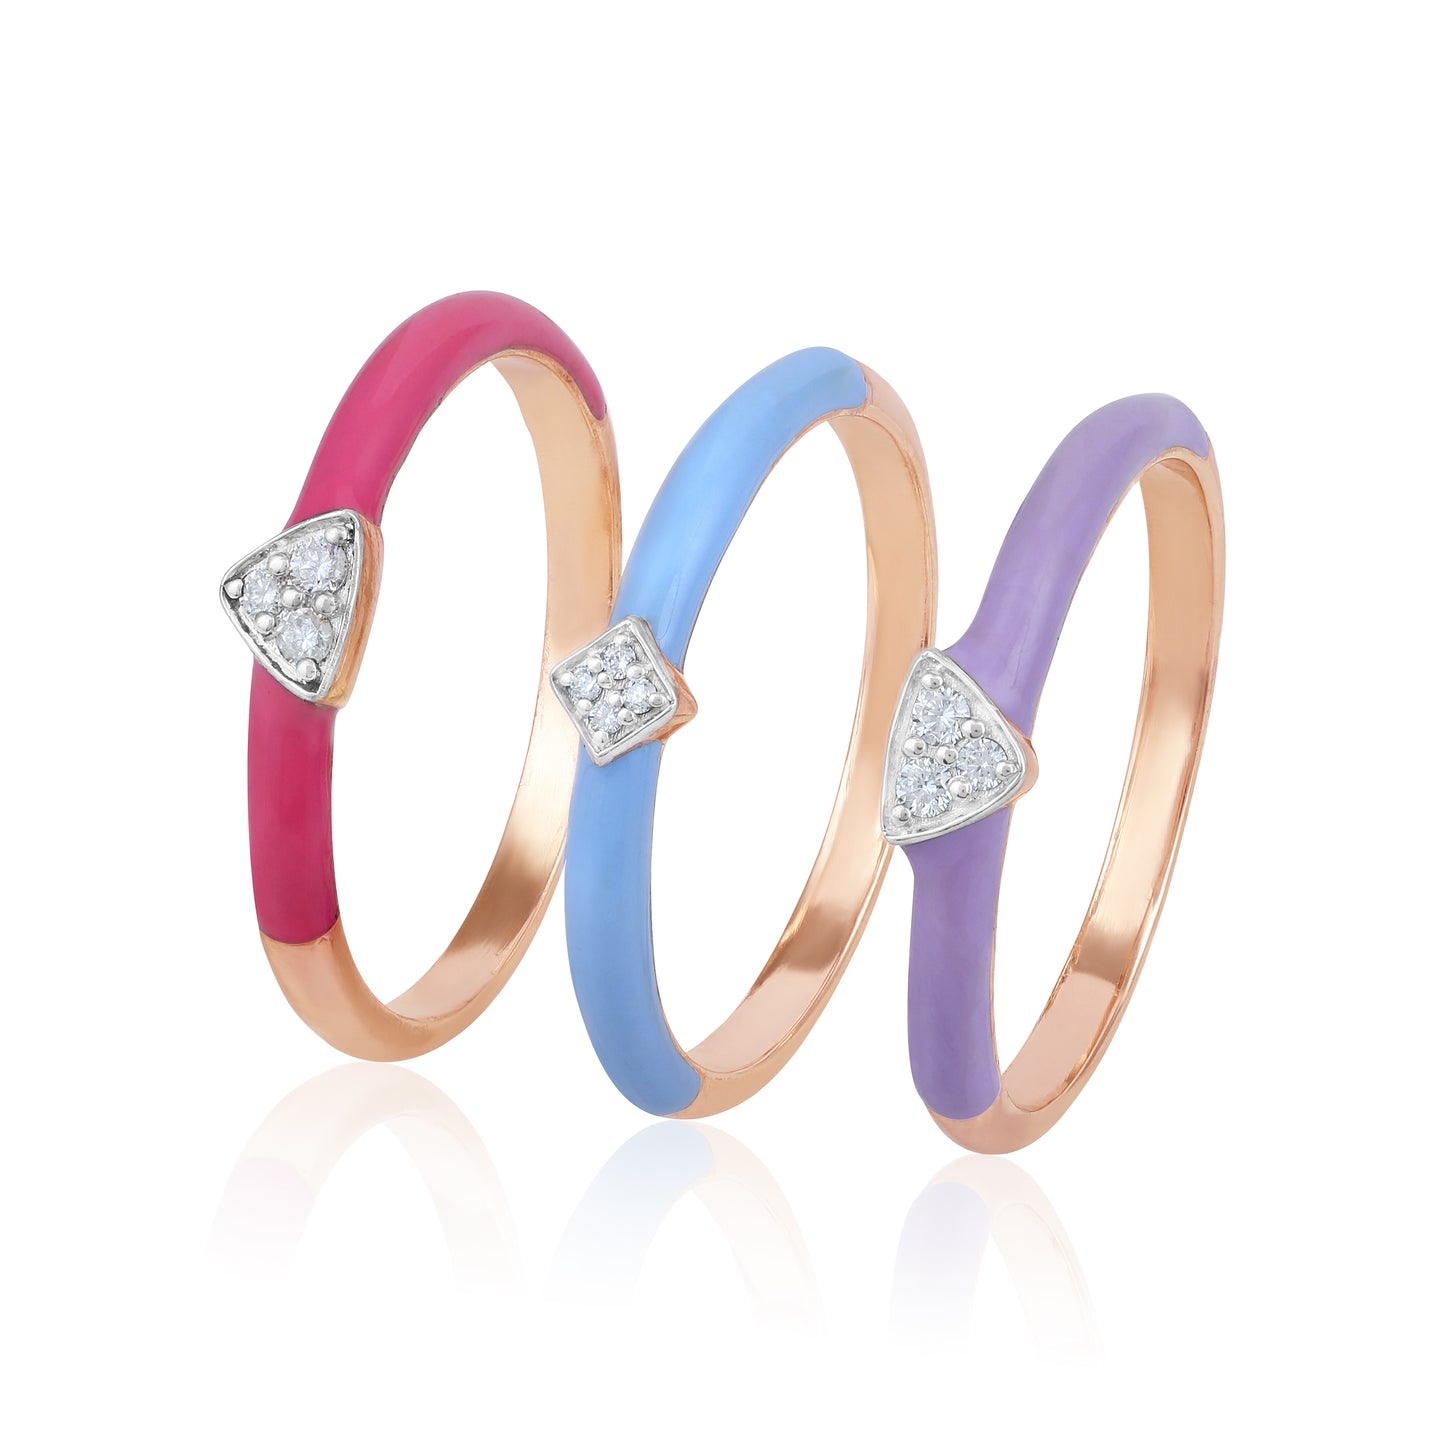 Tricolored Enamel Bands - Set of 3 Diamond Rings